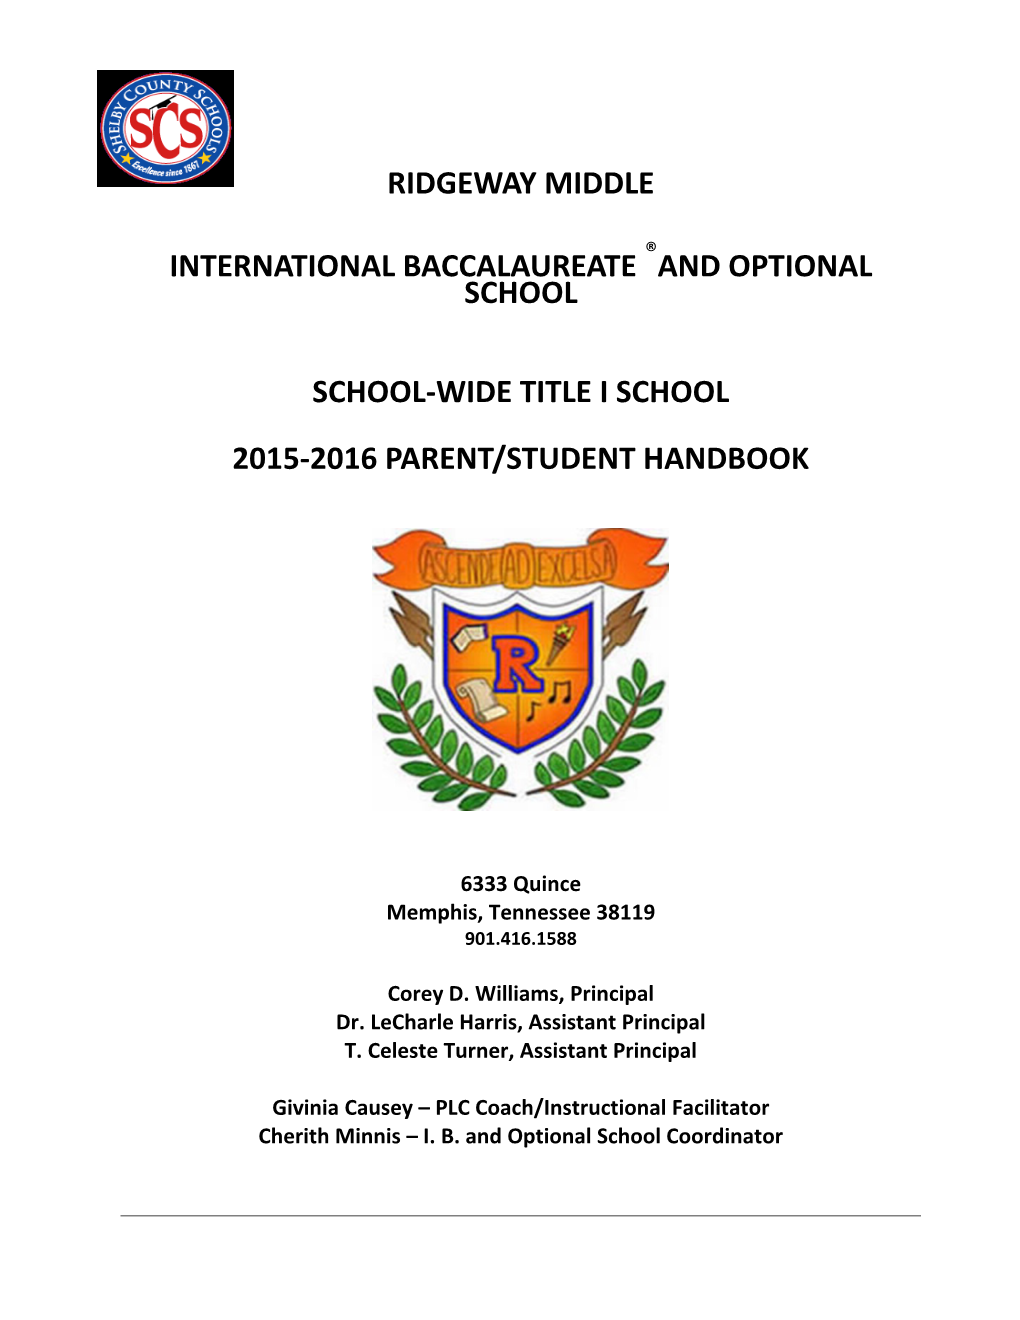 International Baccalaureate and OPTIONAL SCHOOL